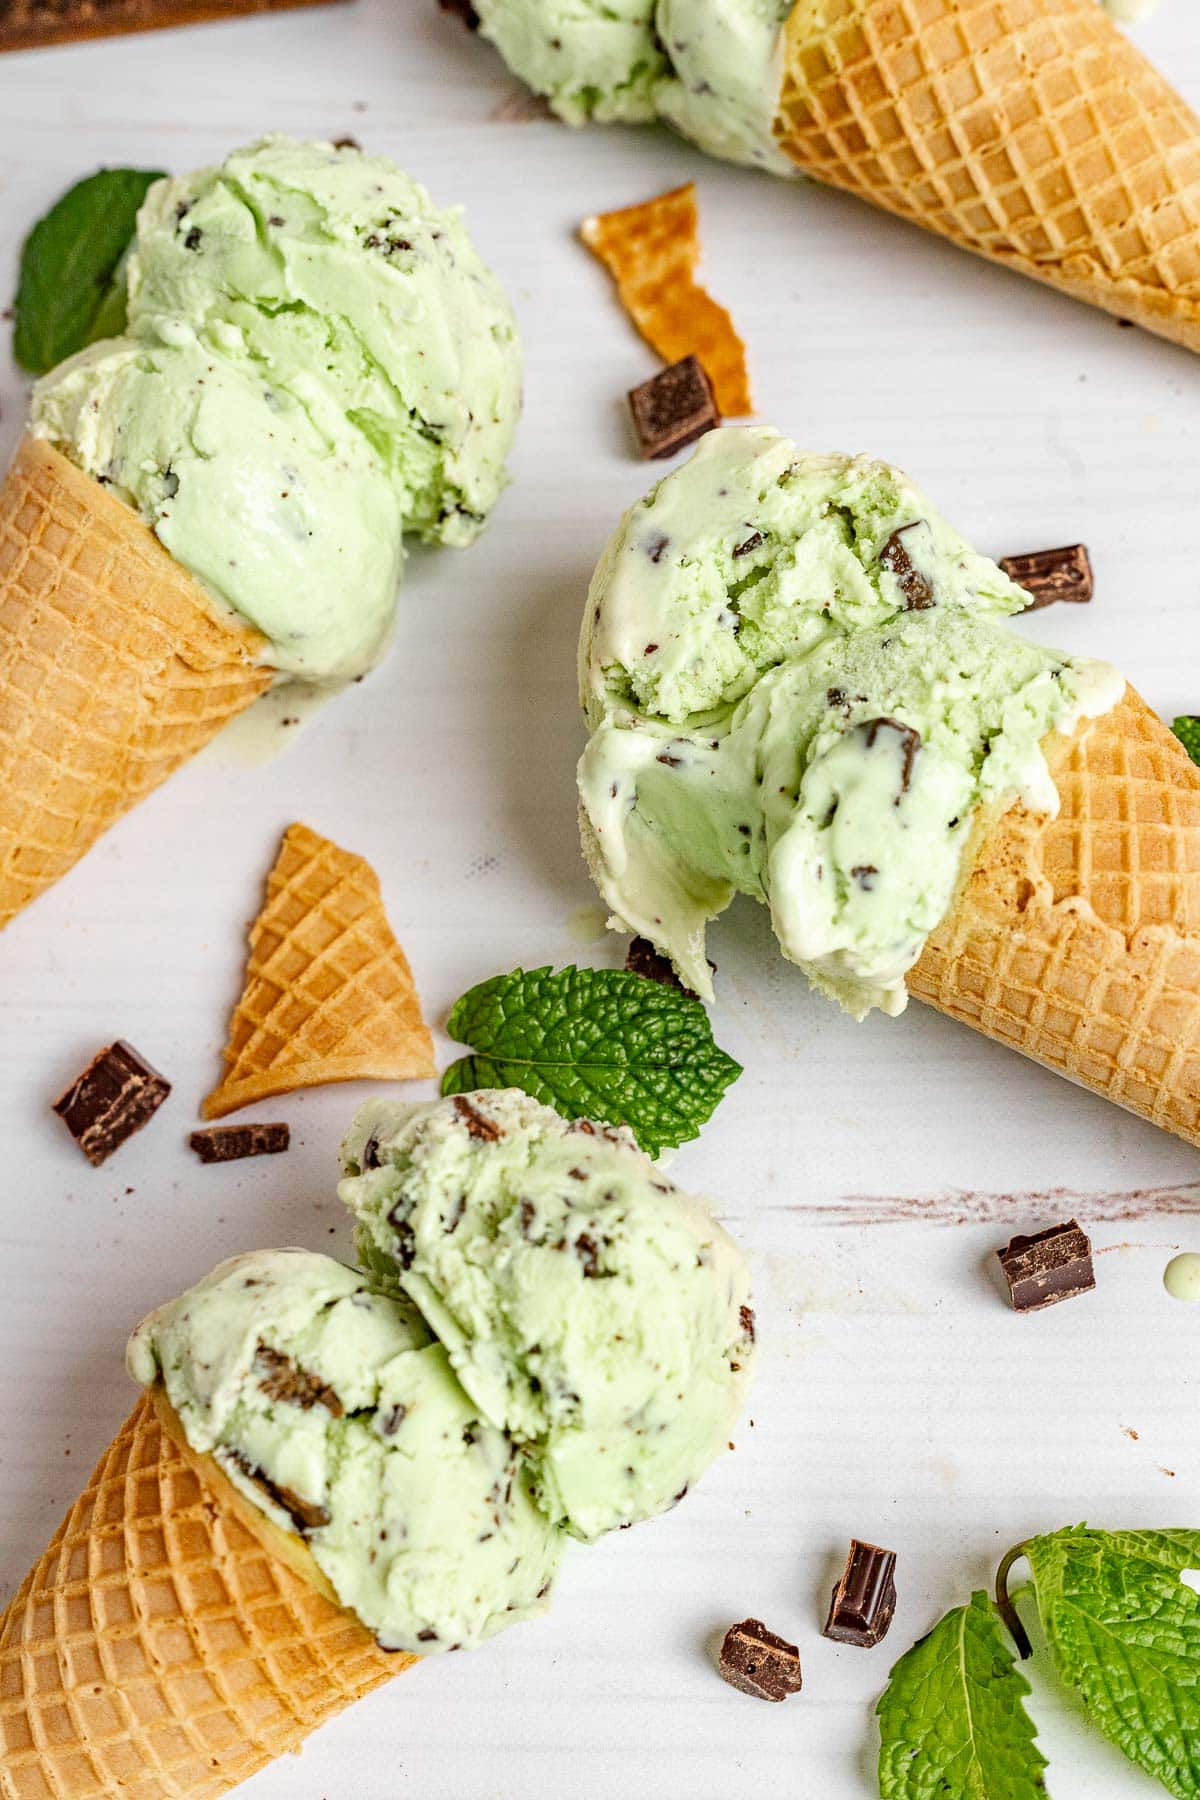 Mint Chocolate Chip Ice Cream three scoops in three cones